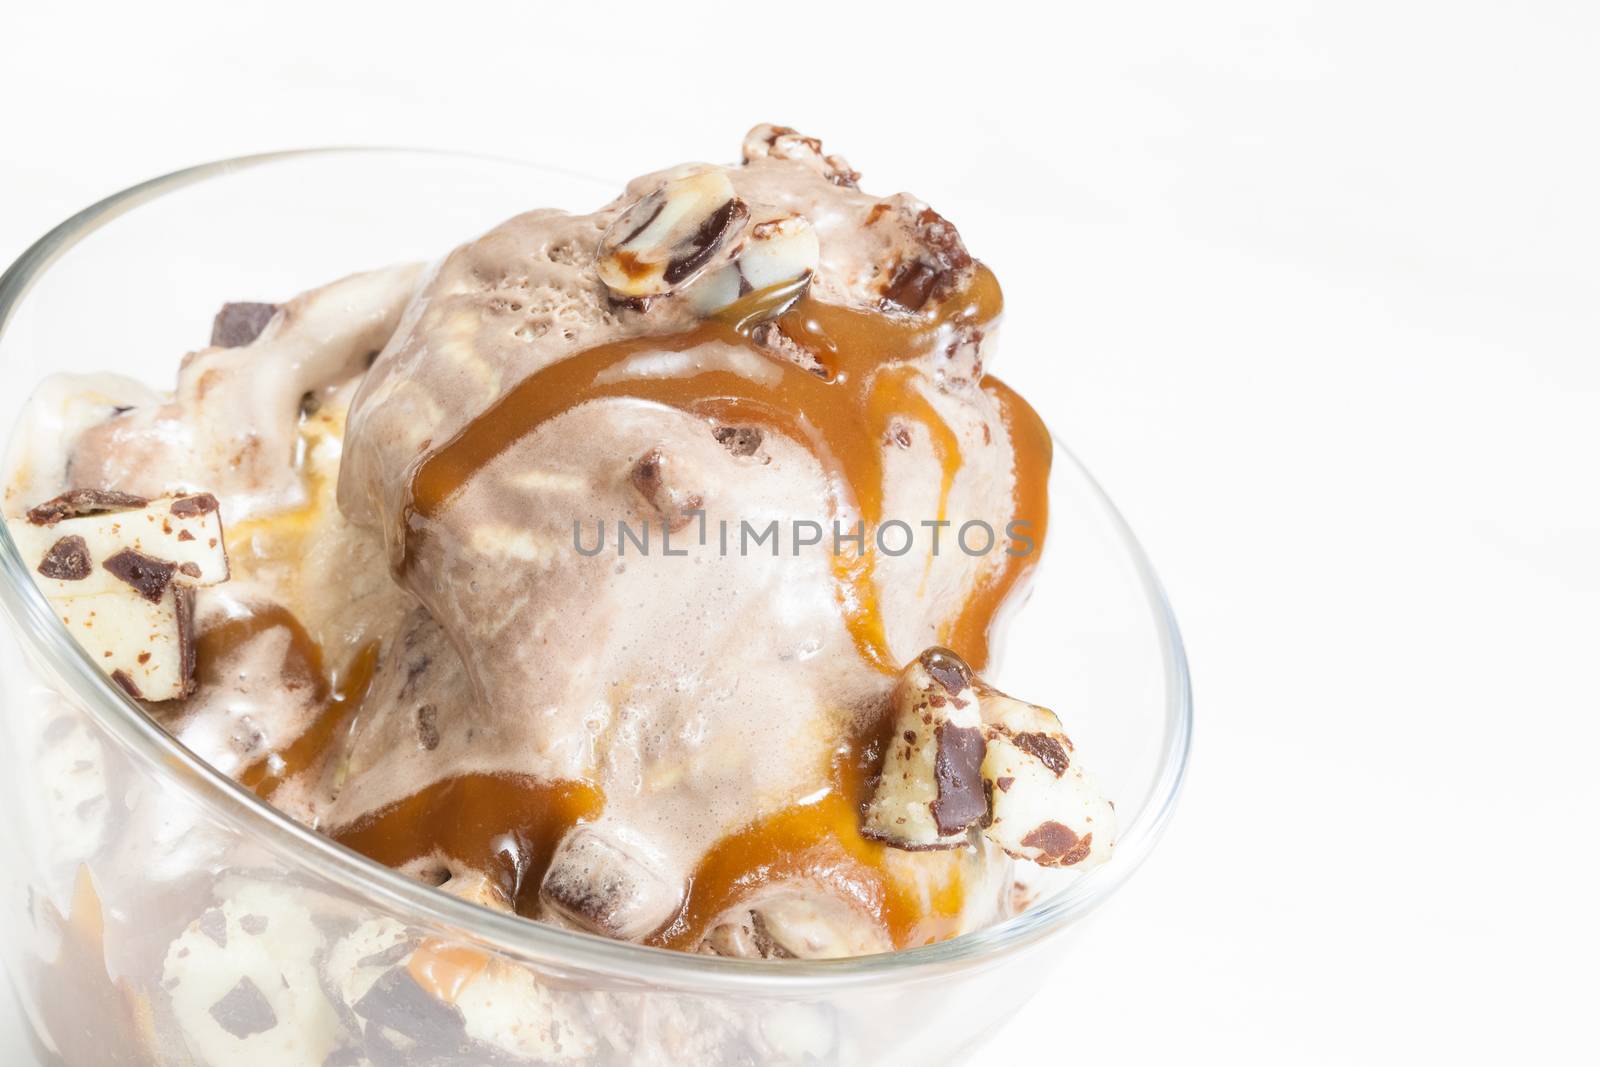 Ice Cream Sundae topped with caramel syrup and chocolate truffle. Close up.